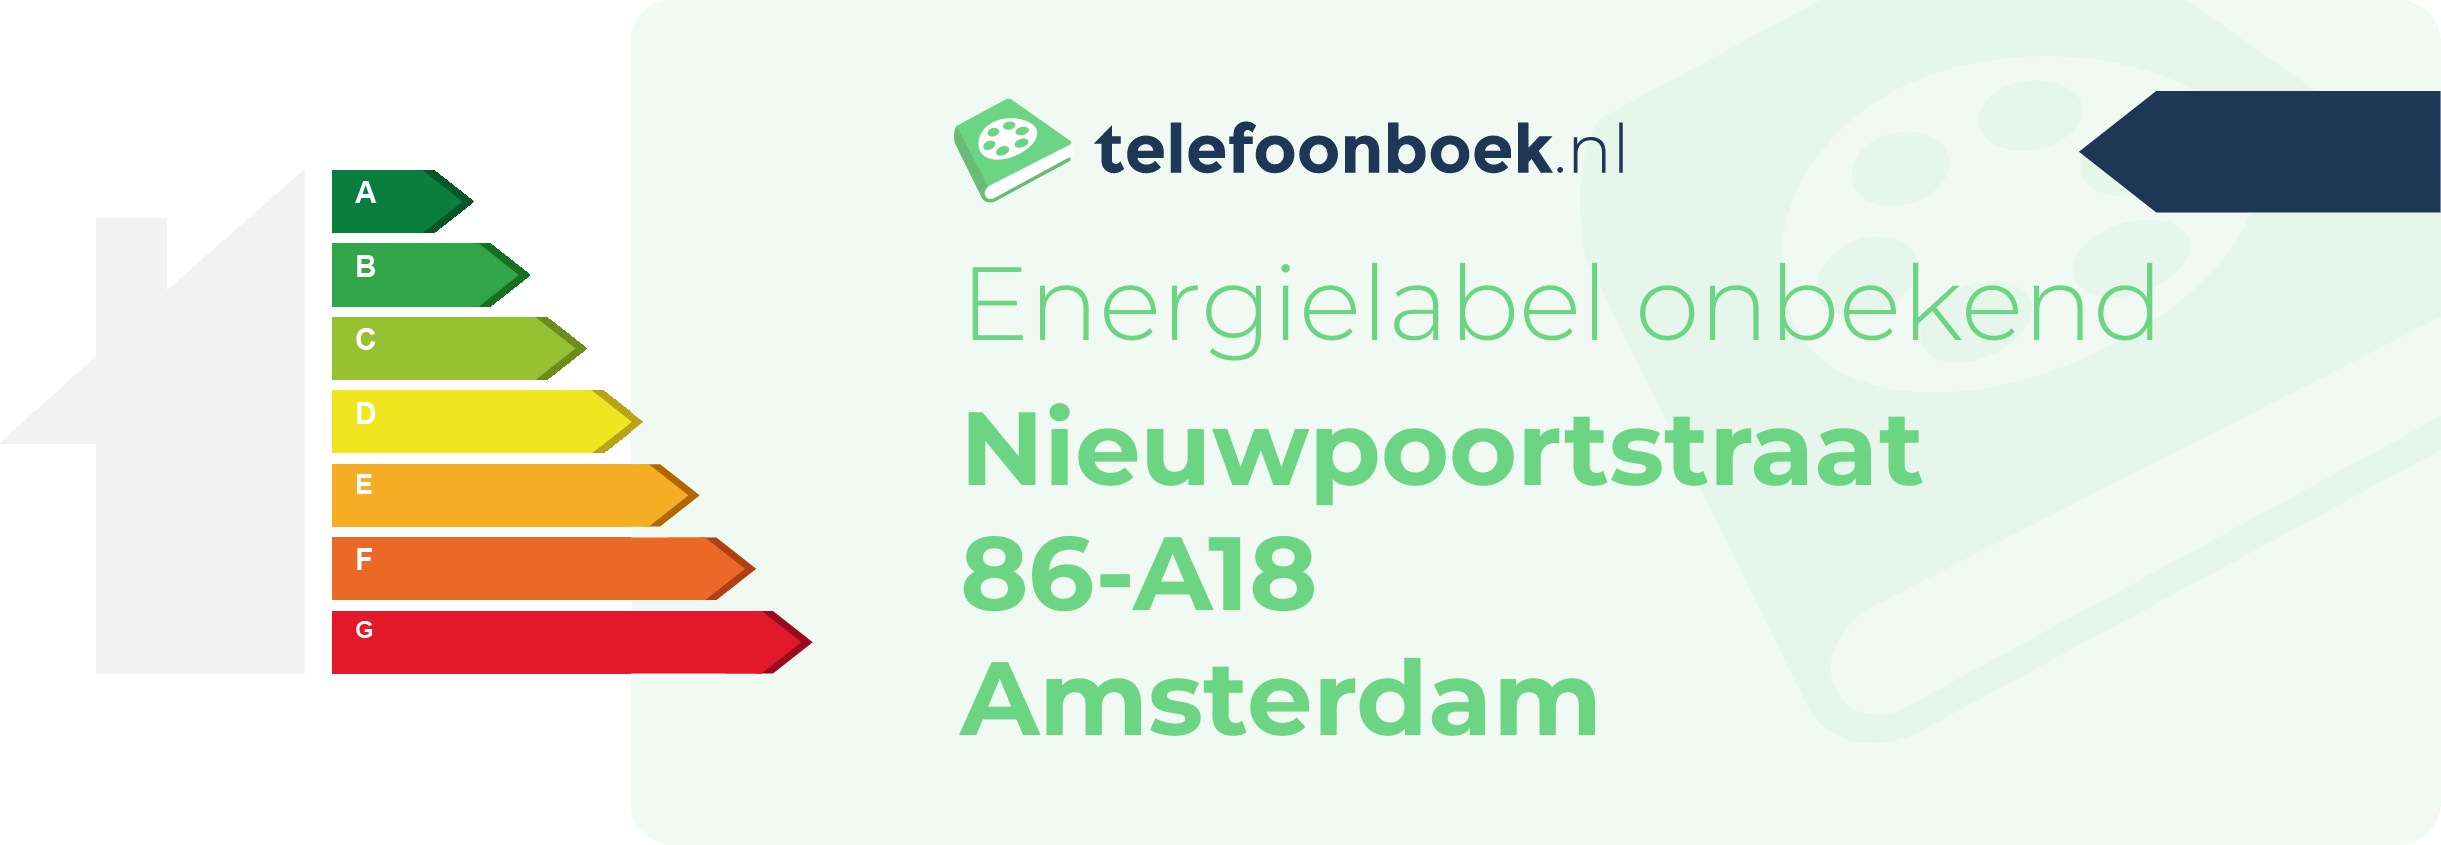 Energielabel Nieuwpoortstraat 86-A18 Amsterdam